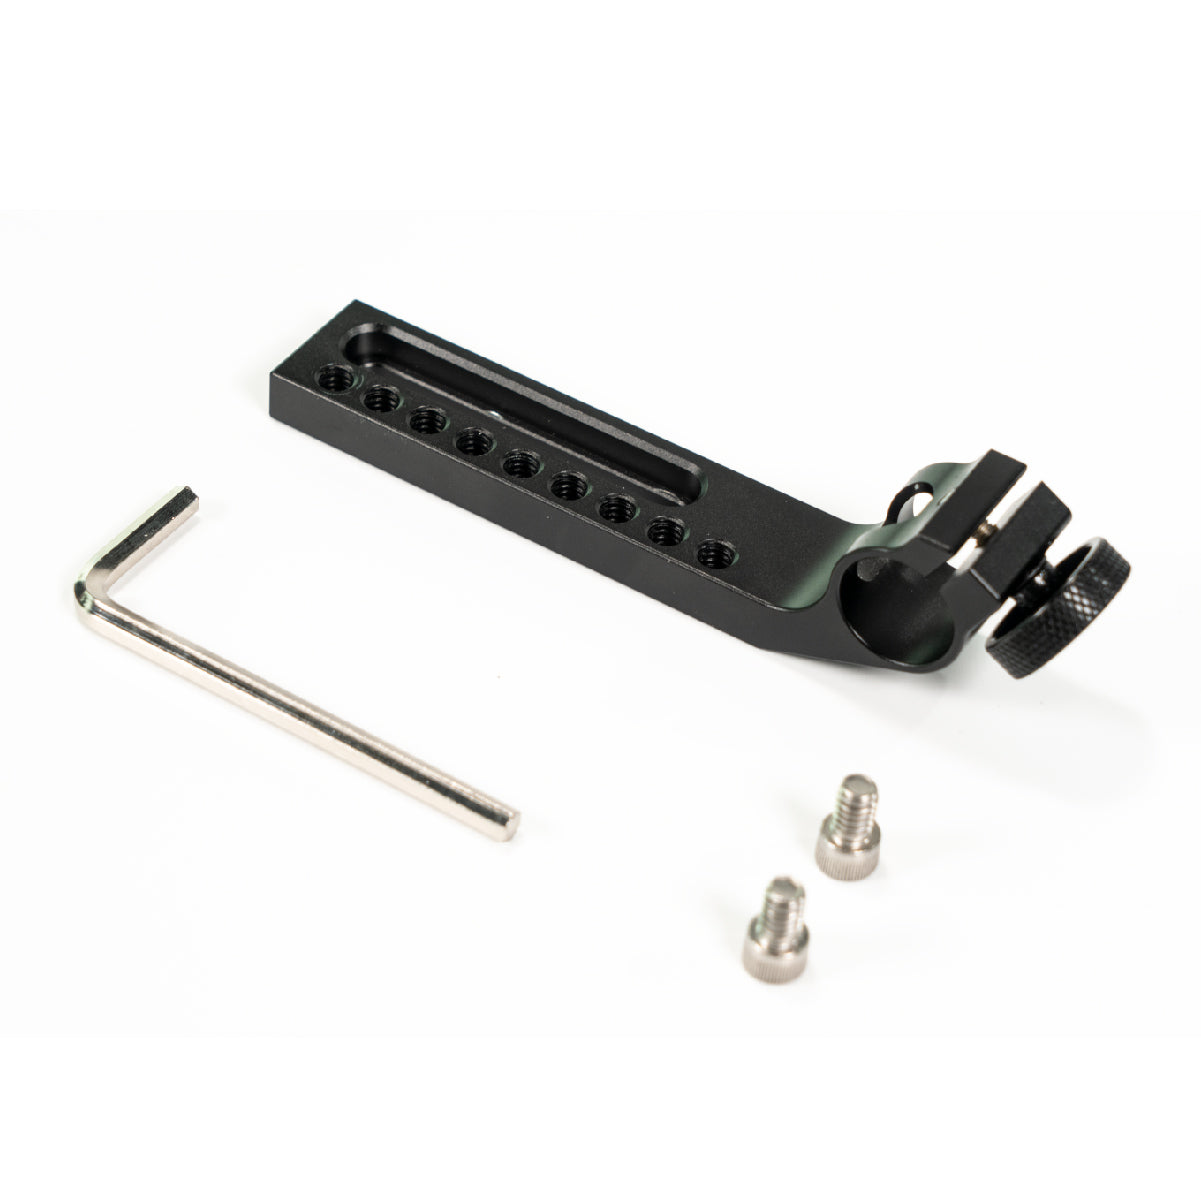 19mm multi-lock rod clip